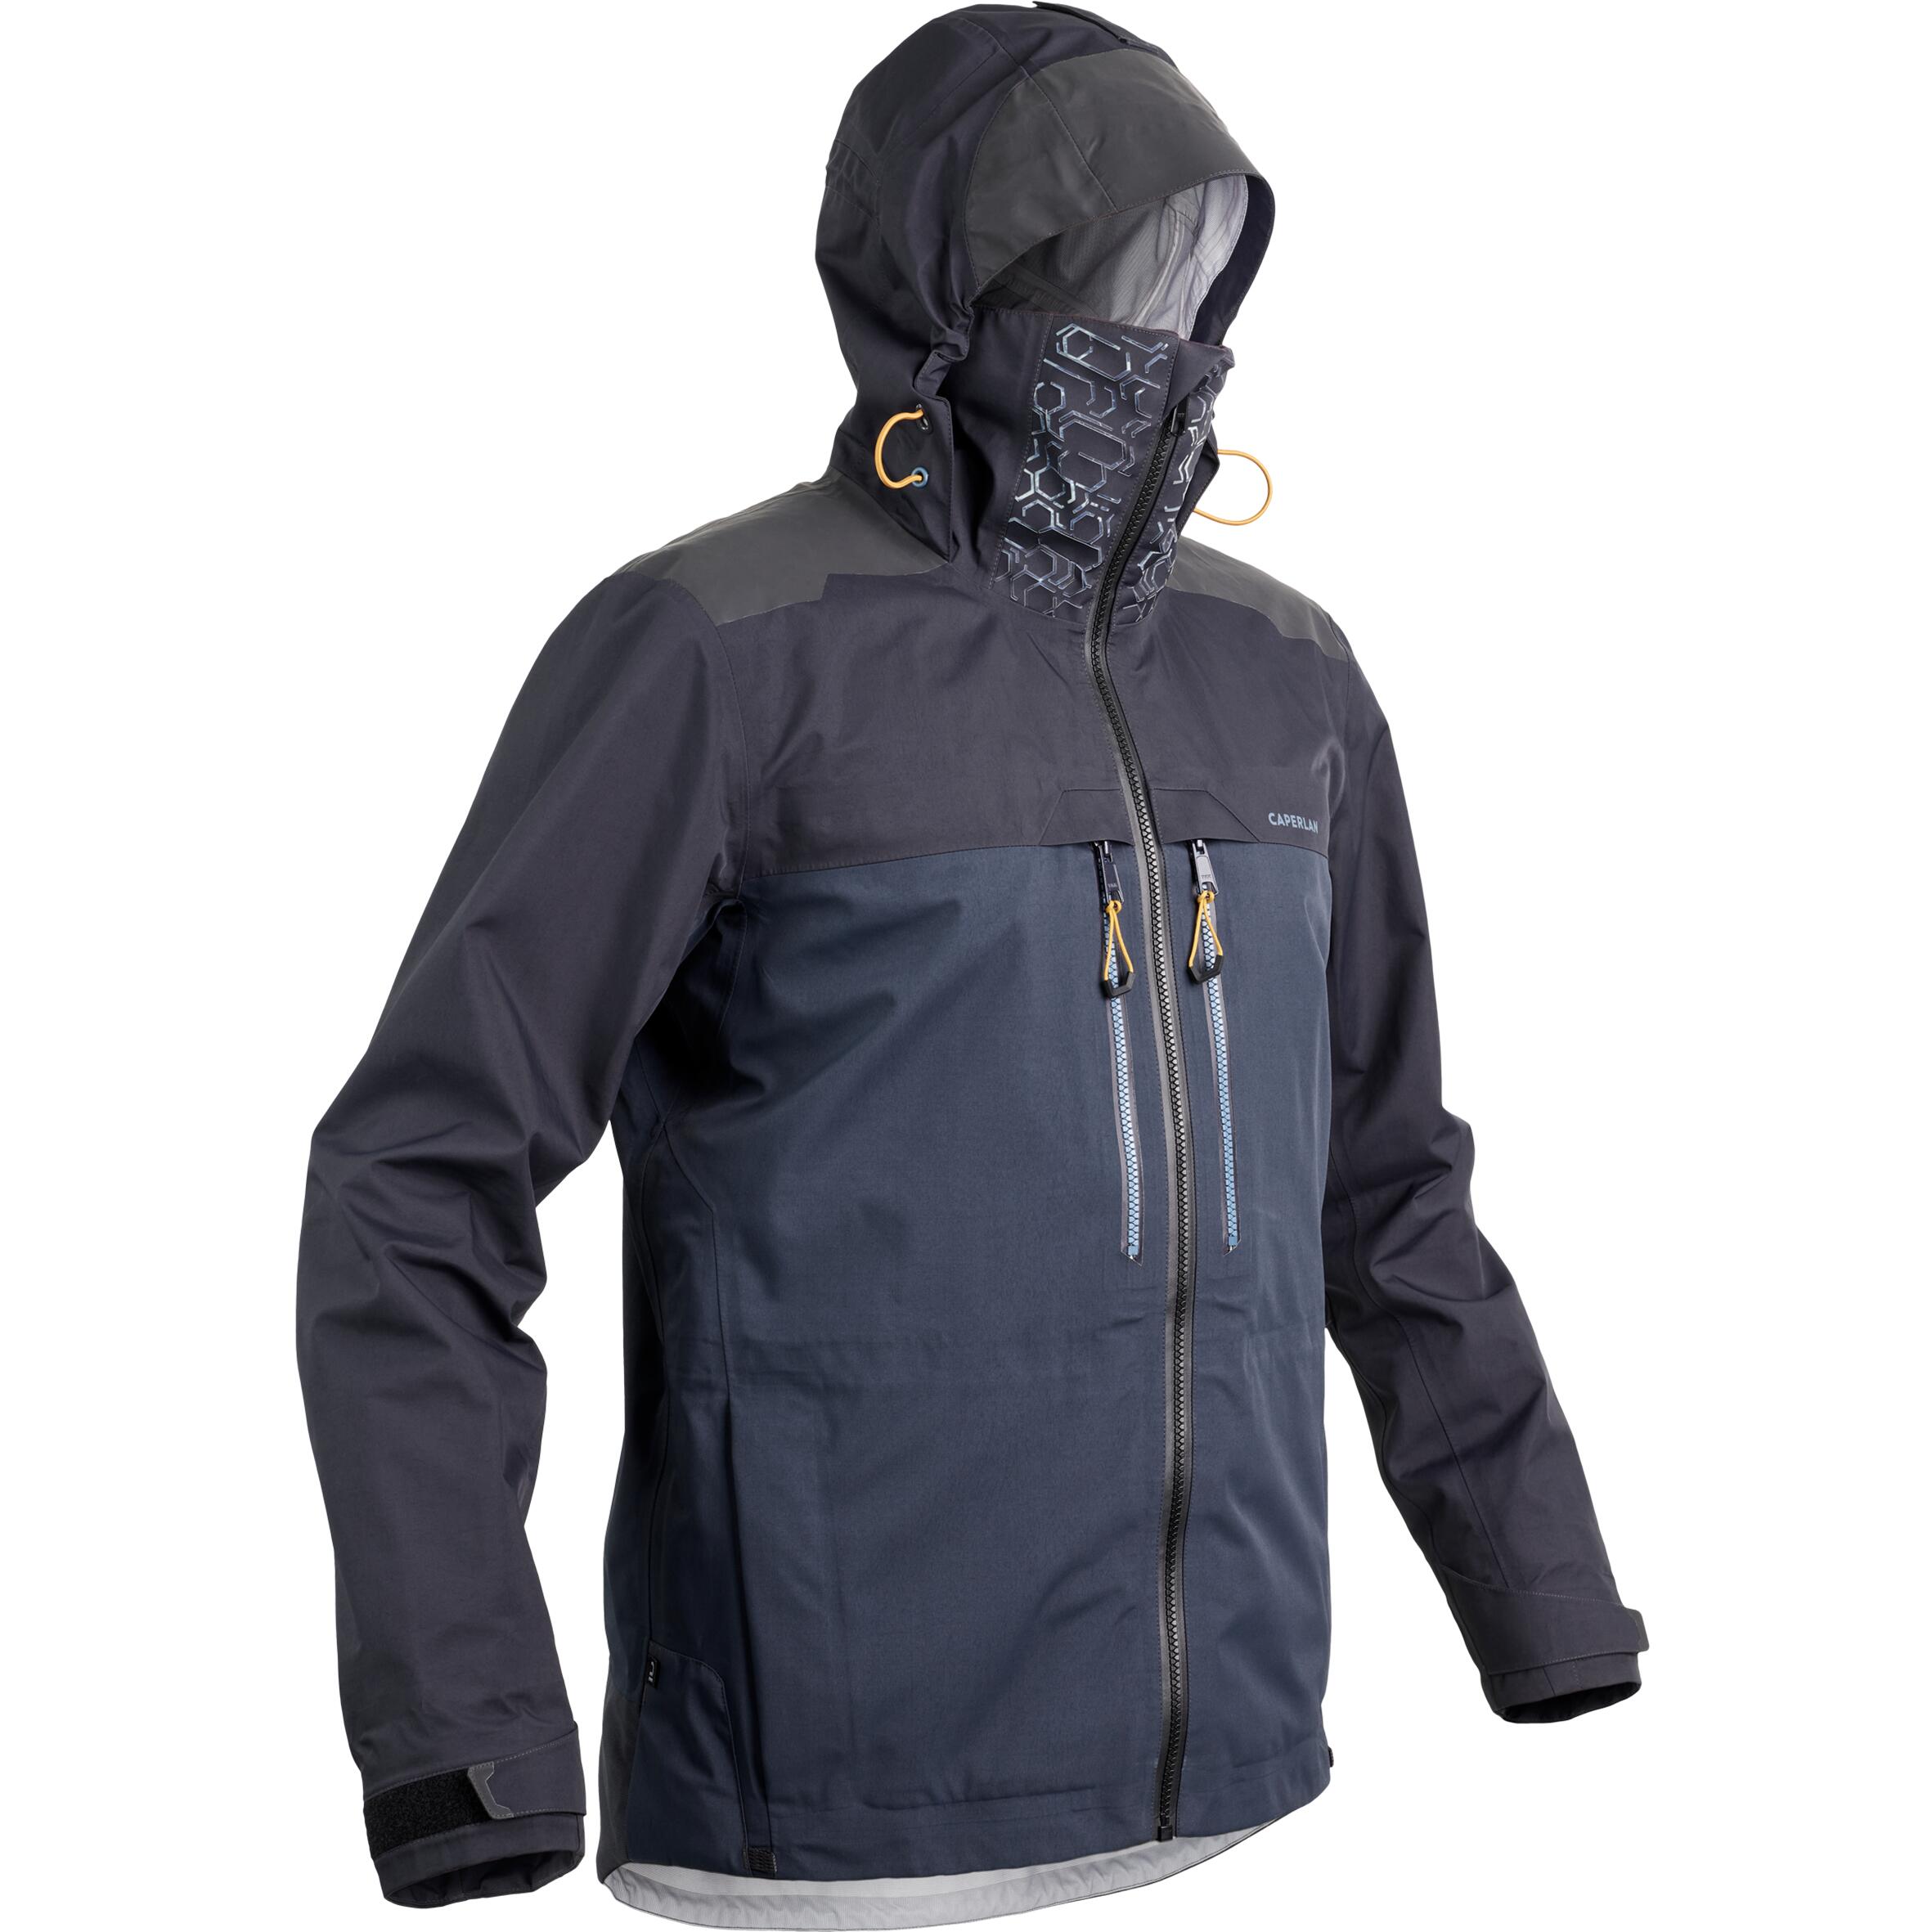 Waterproof fishing jacket 900 17/17